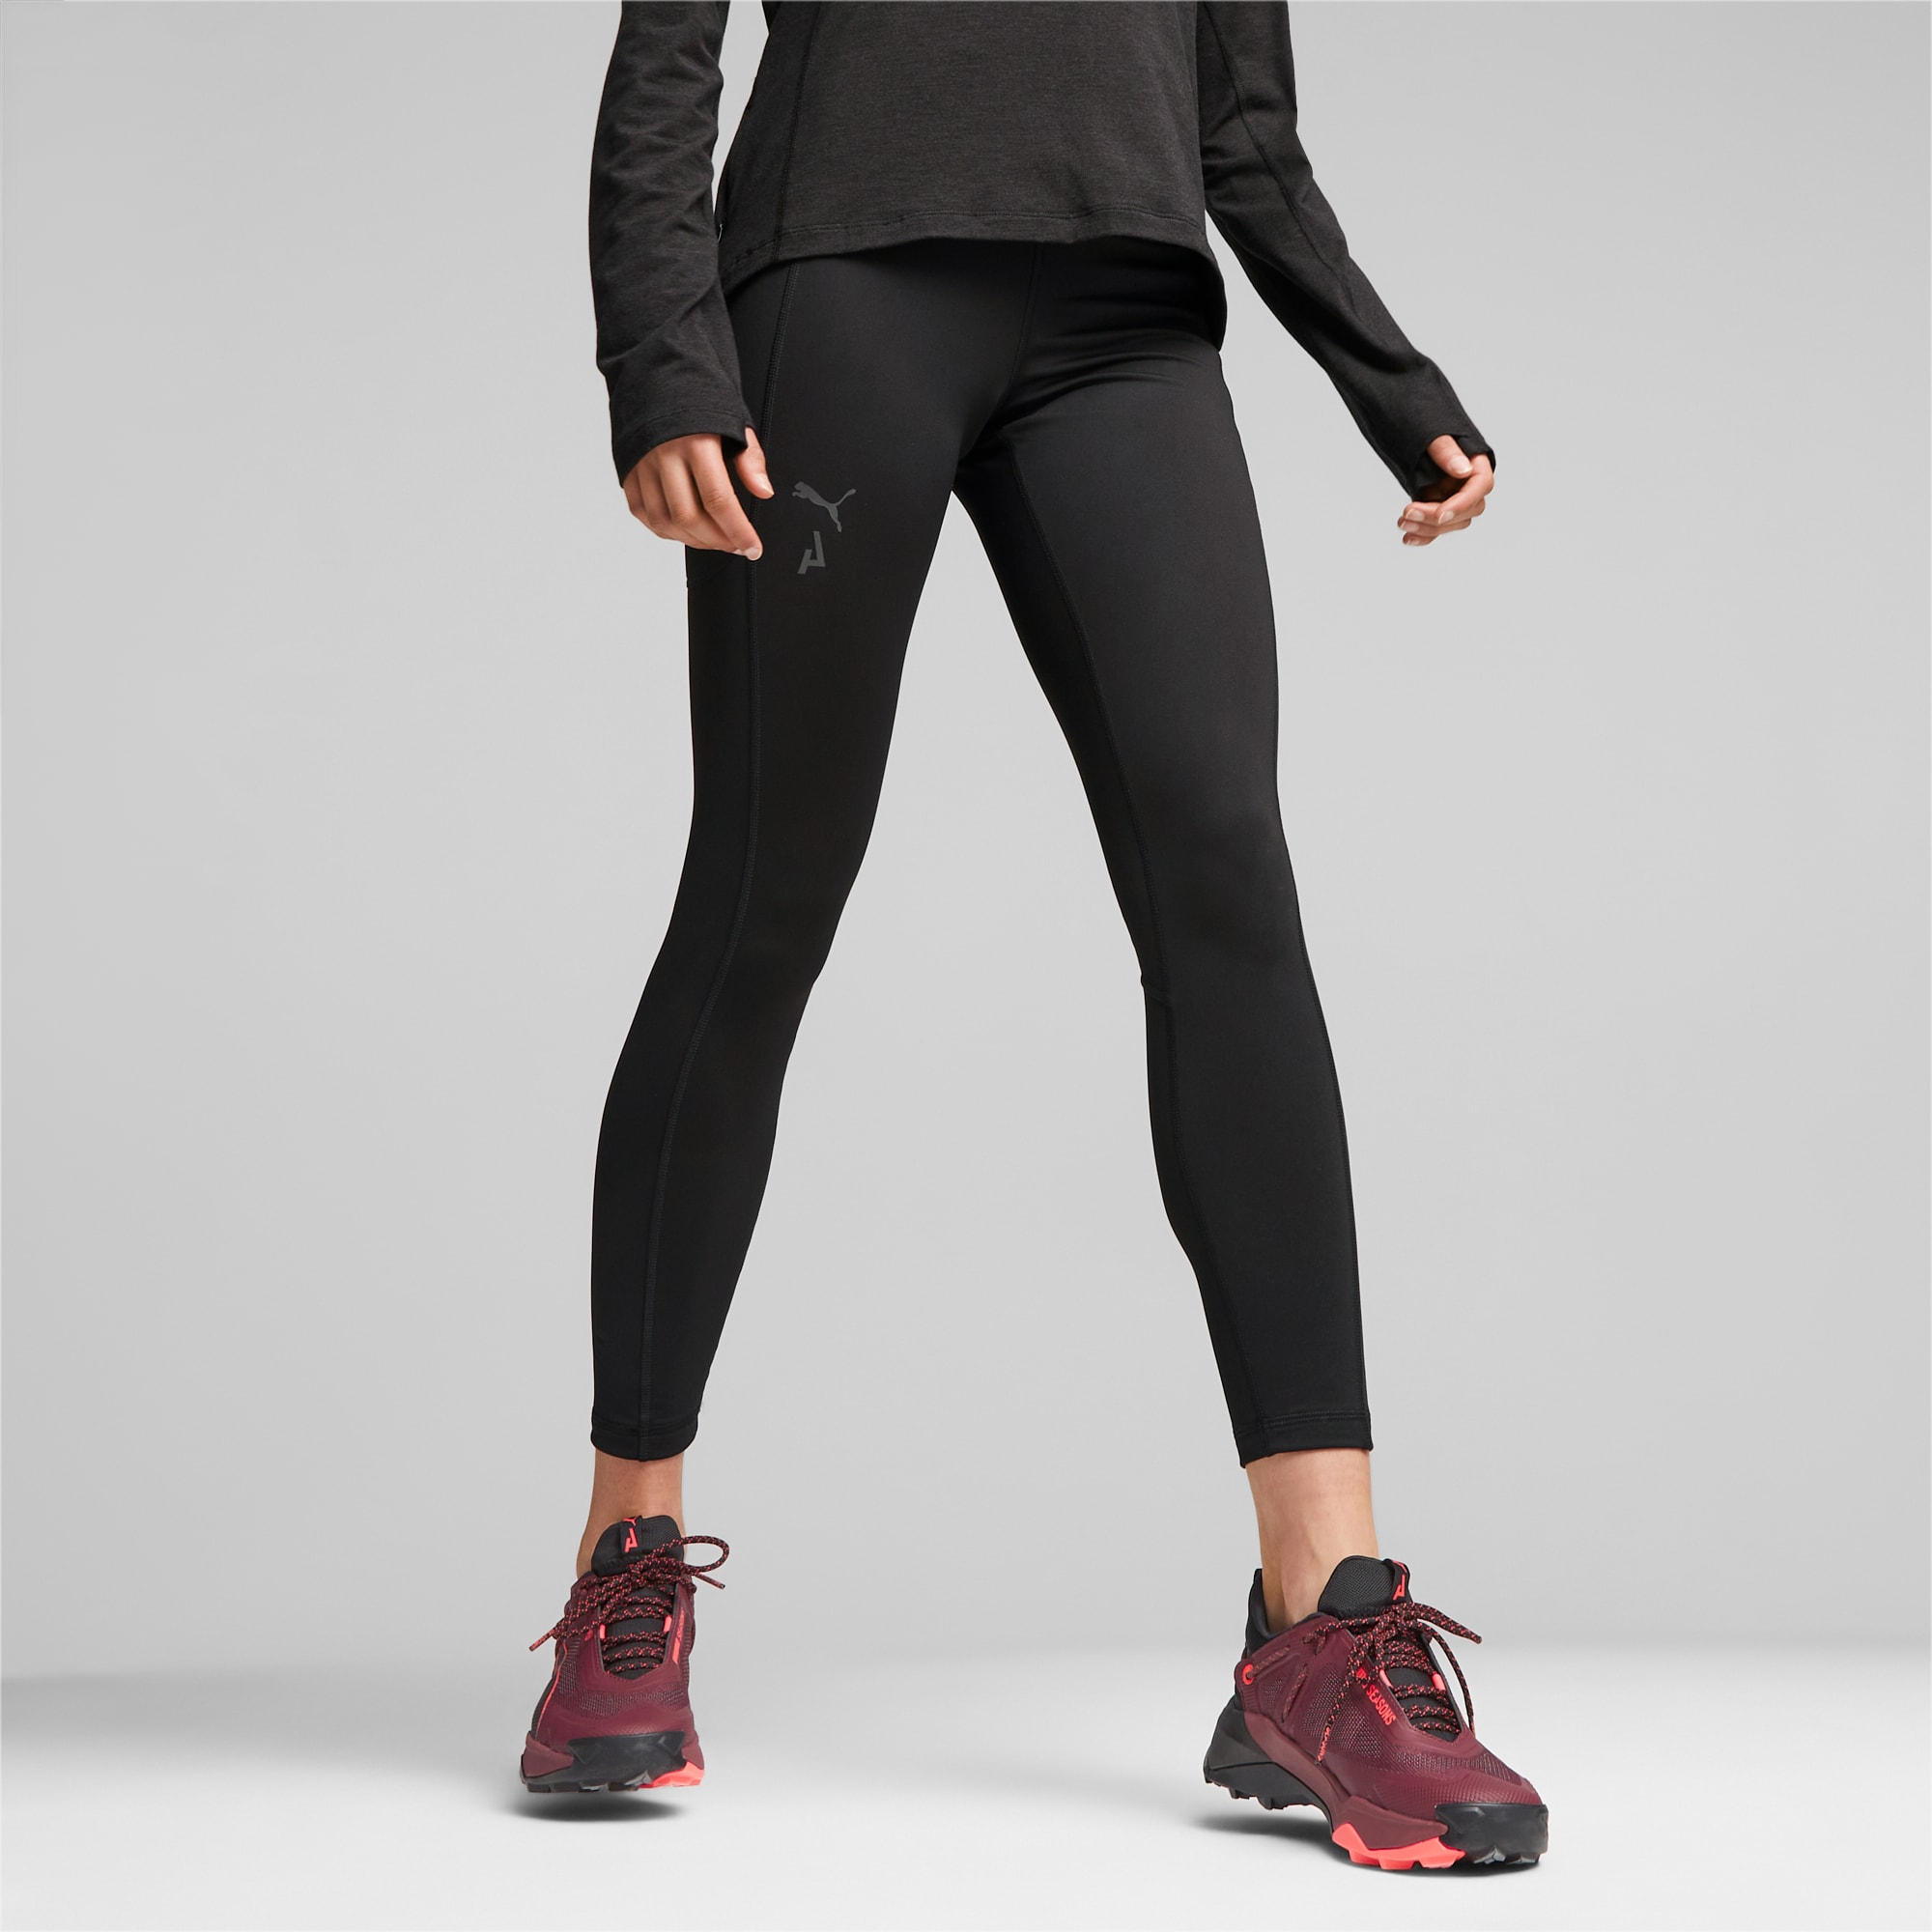 Nike Stirrup Athletic Leggings for Women